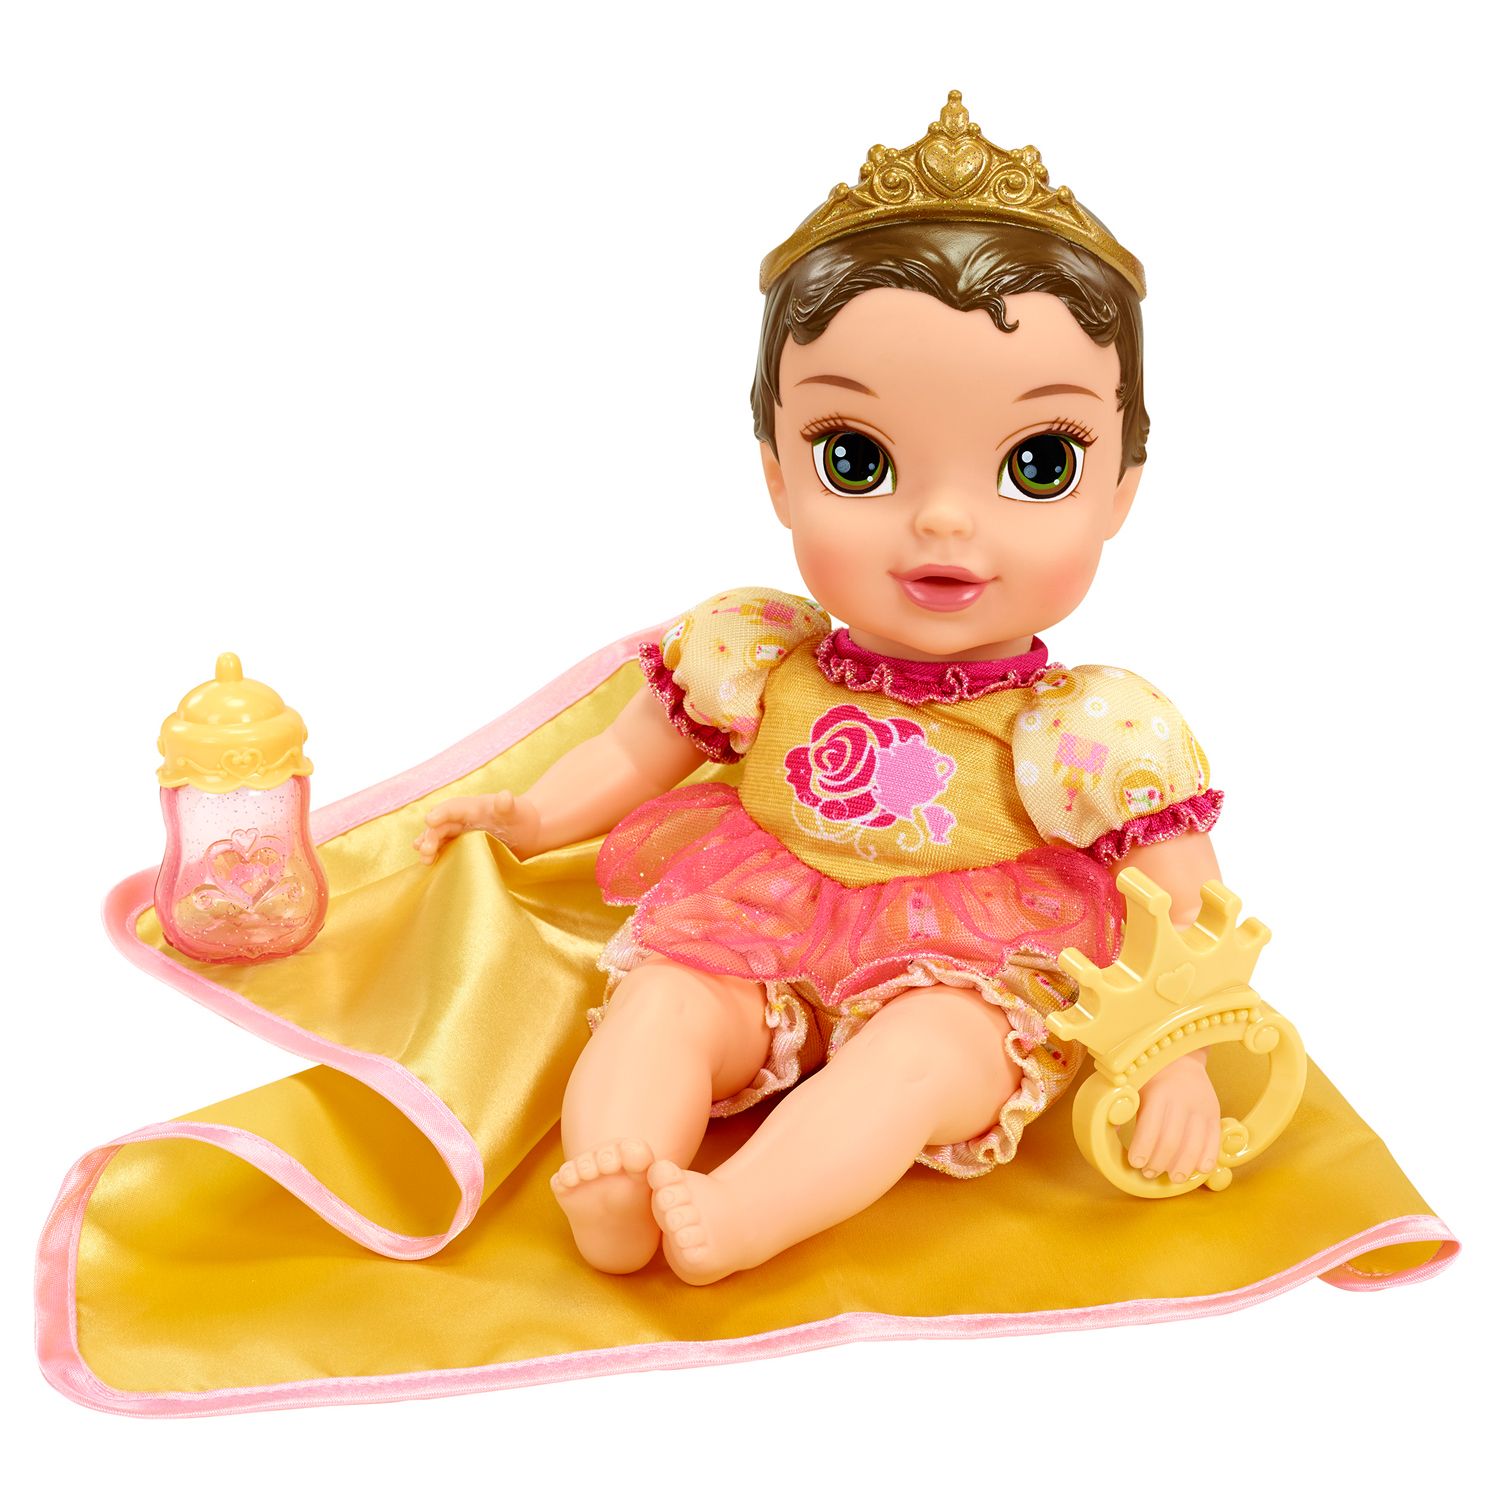 disney princess baby belle doll